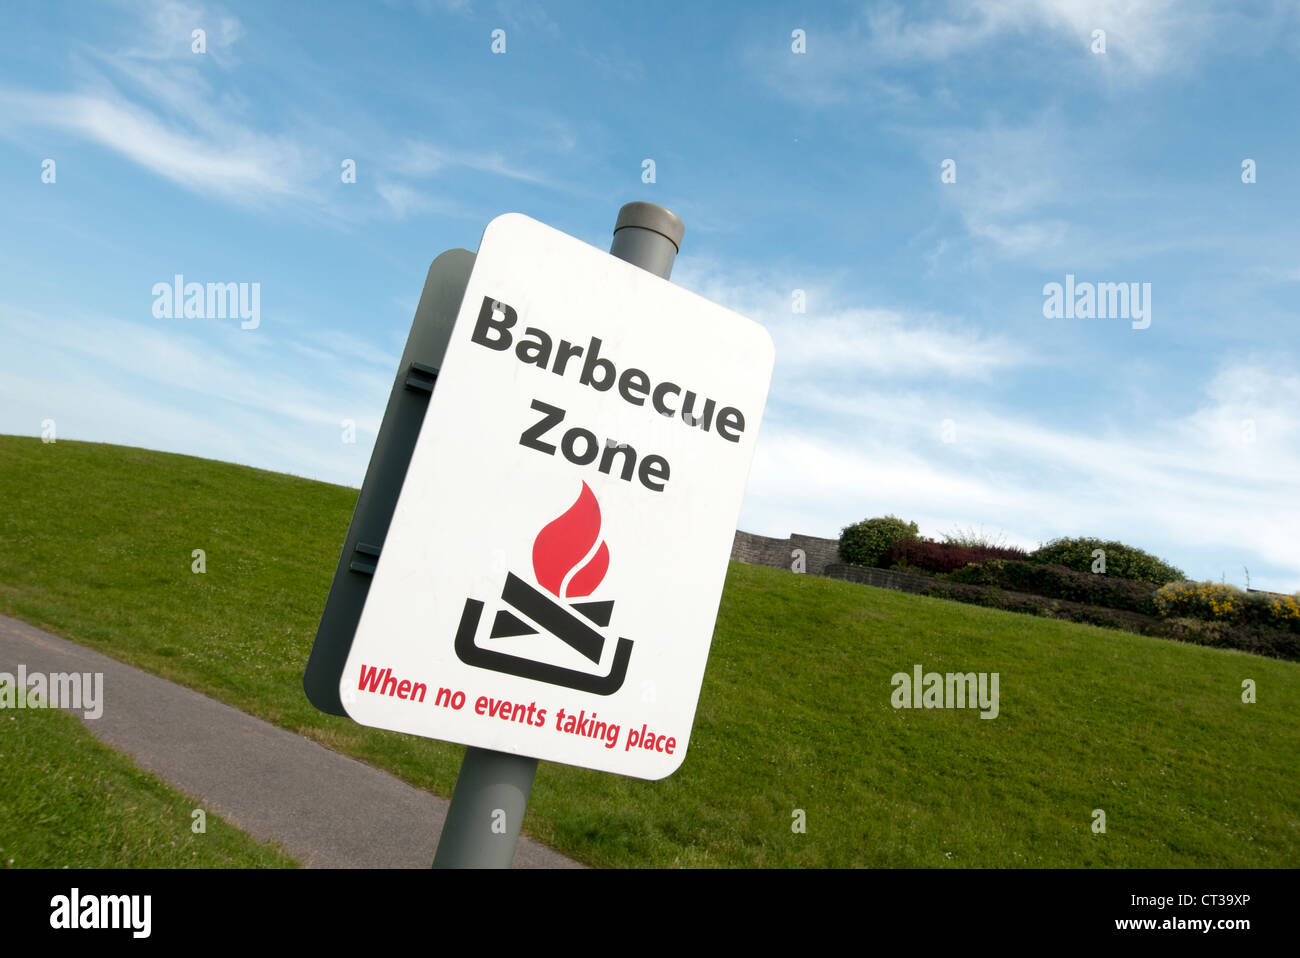 barbecue zone sign Stock Photo